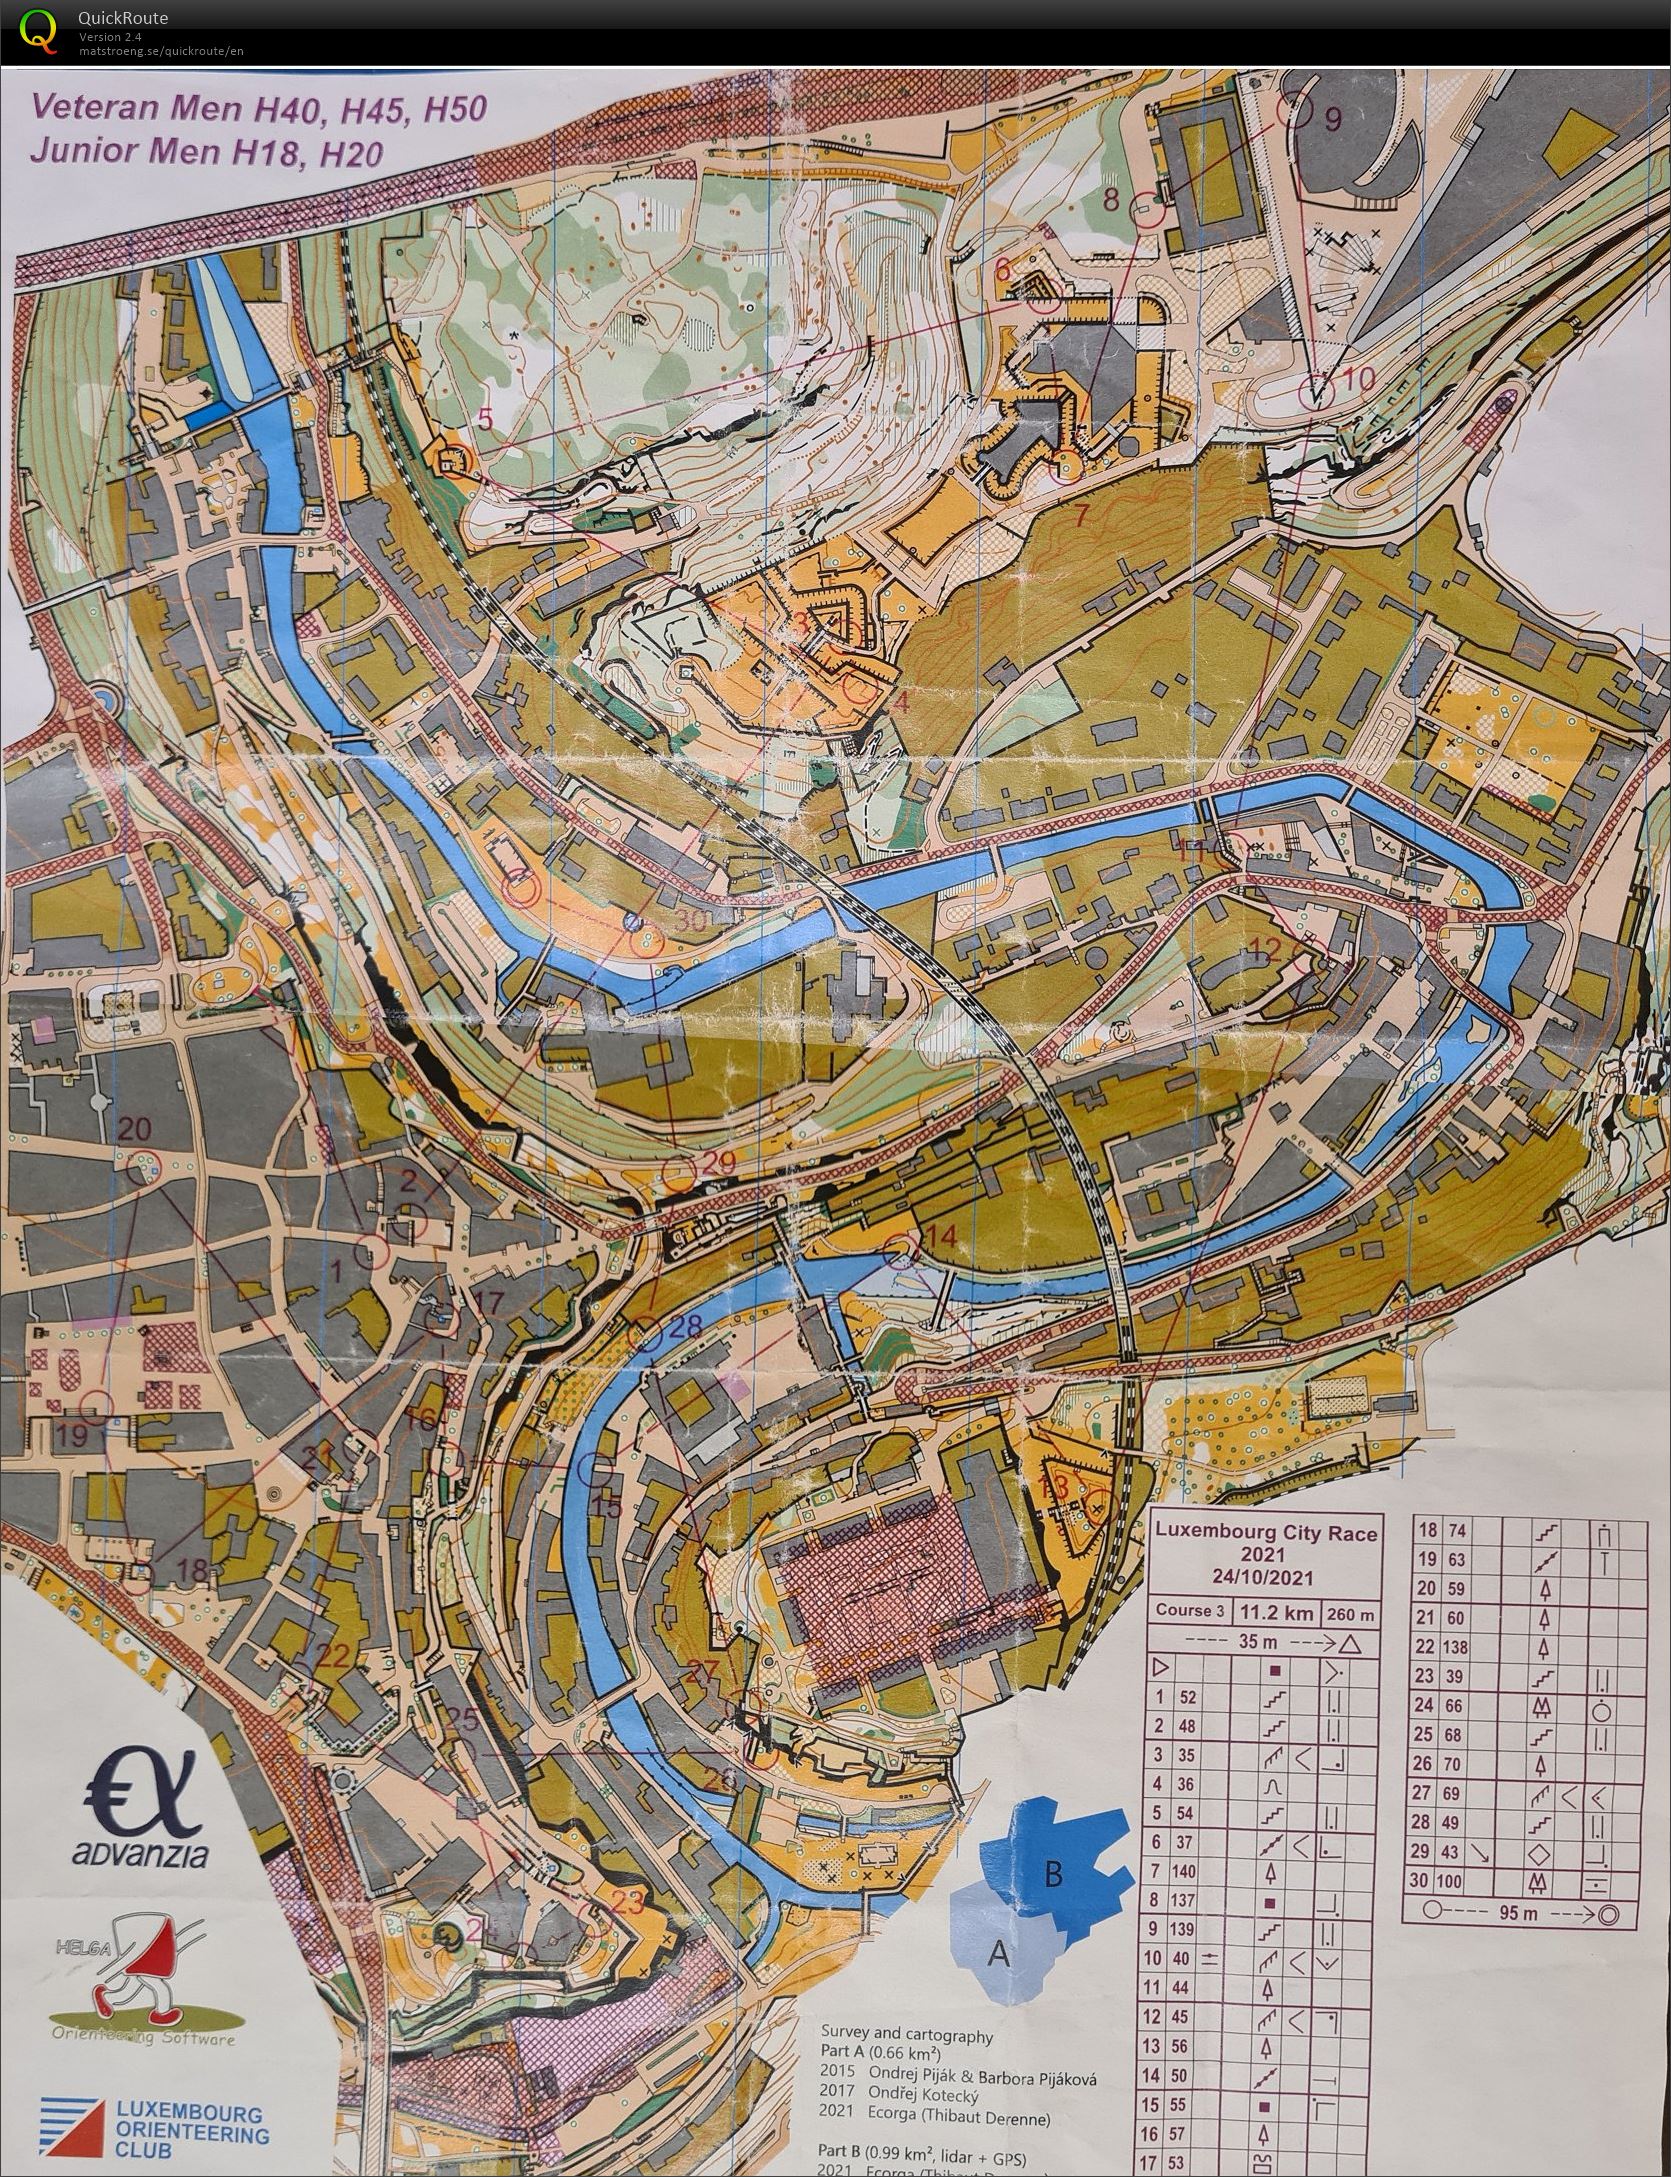 Luxemburg City Race, Long, M50 (24-10-2021)